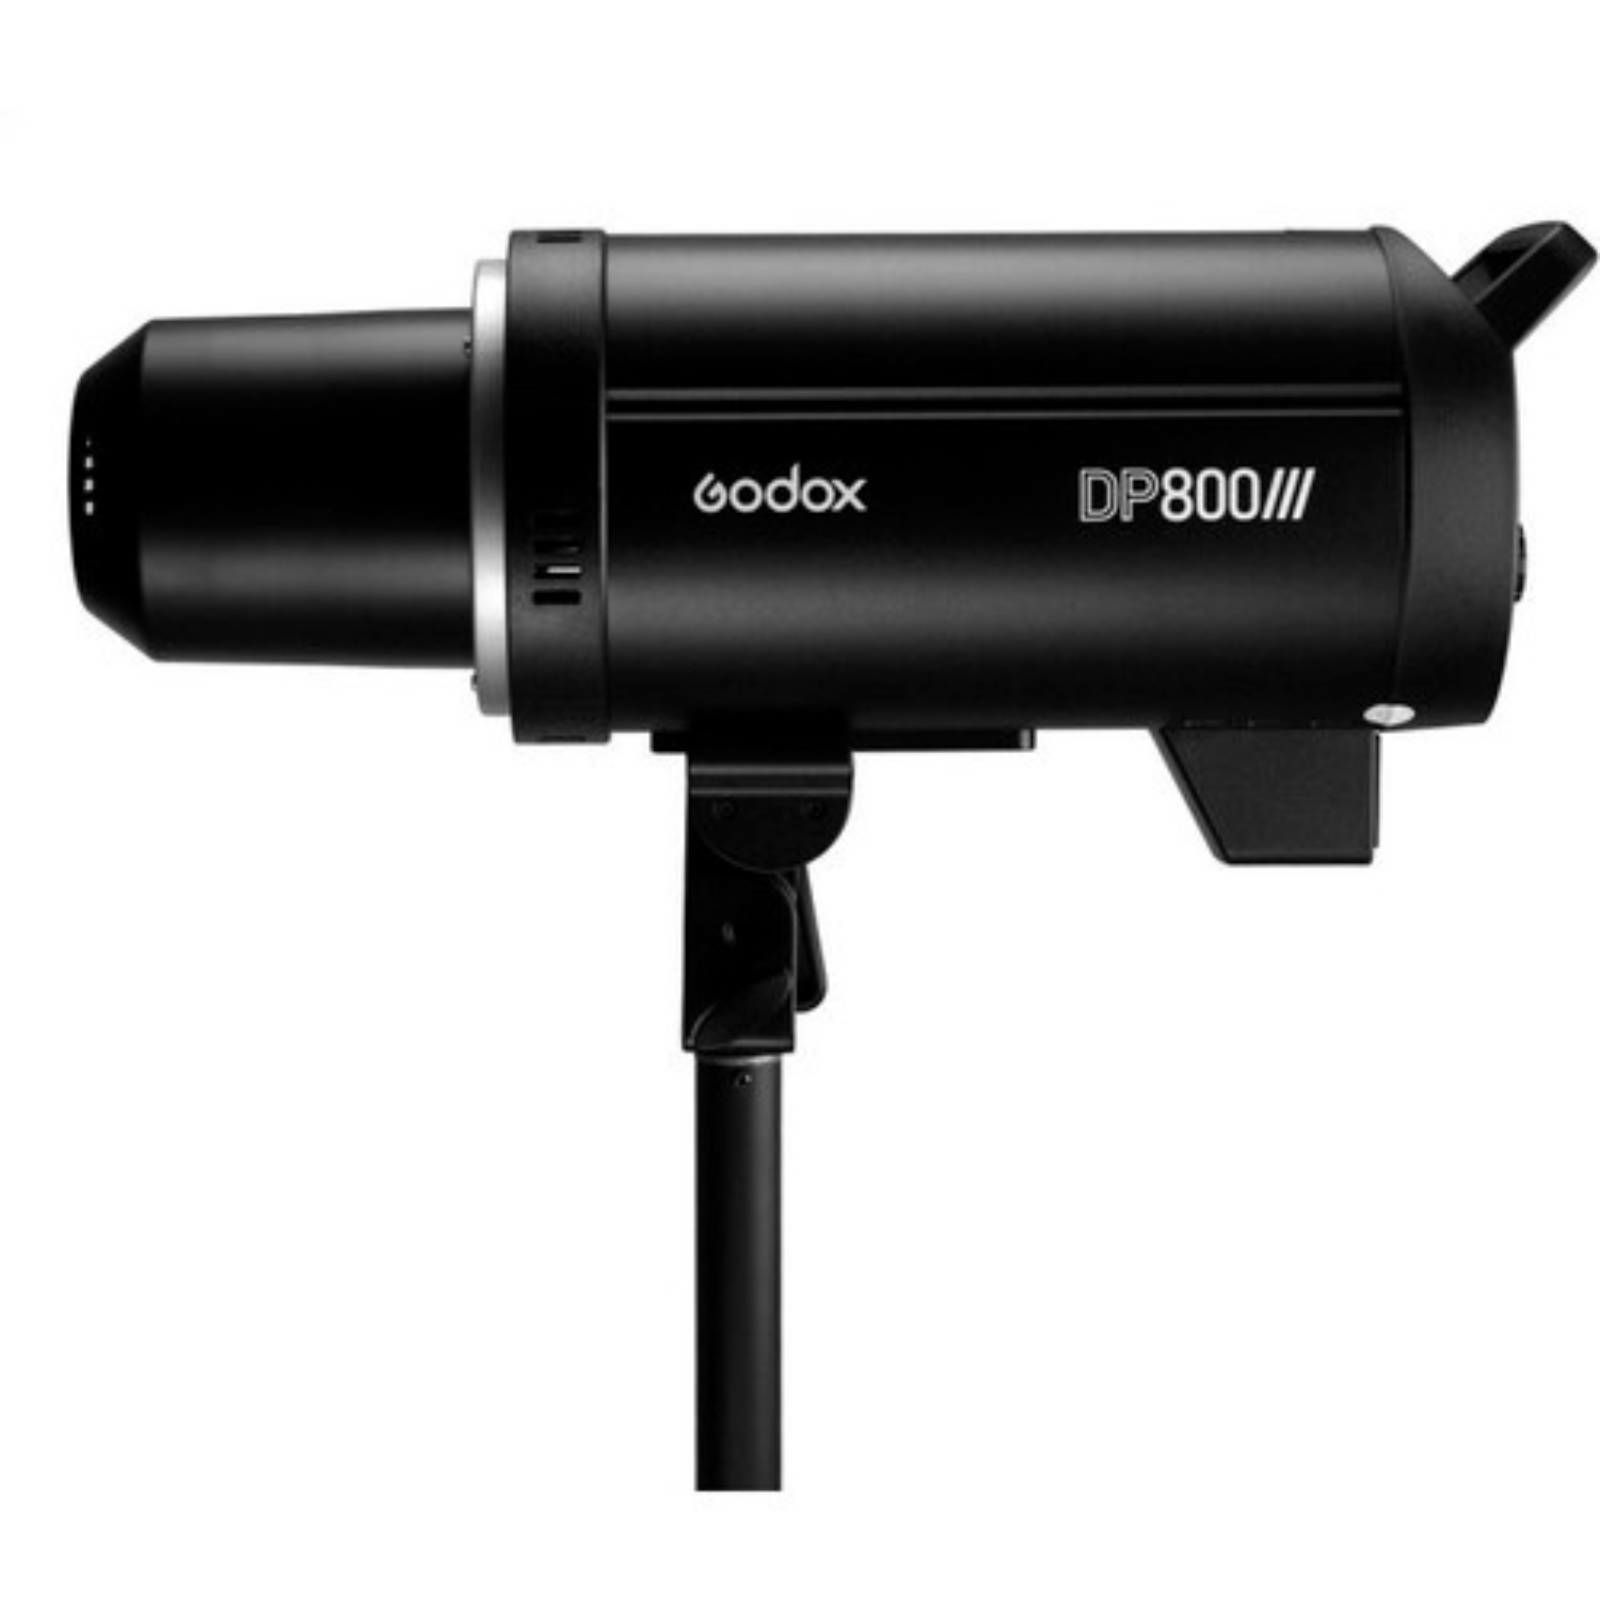 Godox DP800III Studio Flash studijska bljeskalica DP800 III